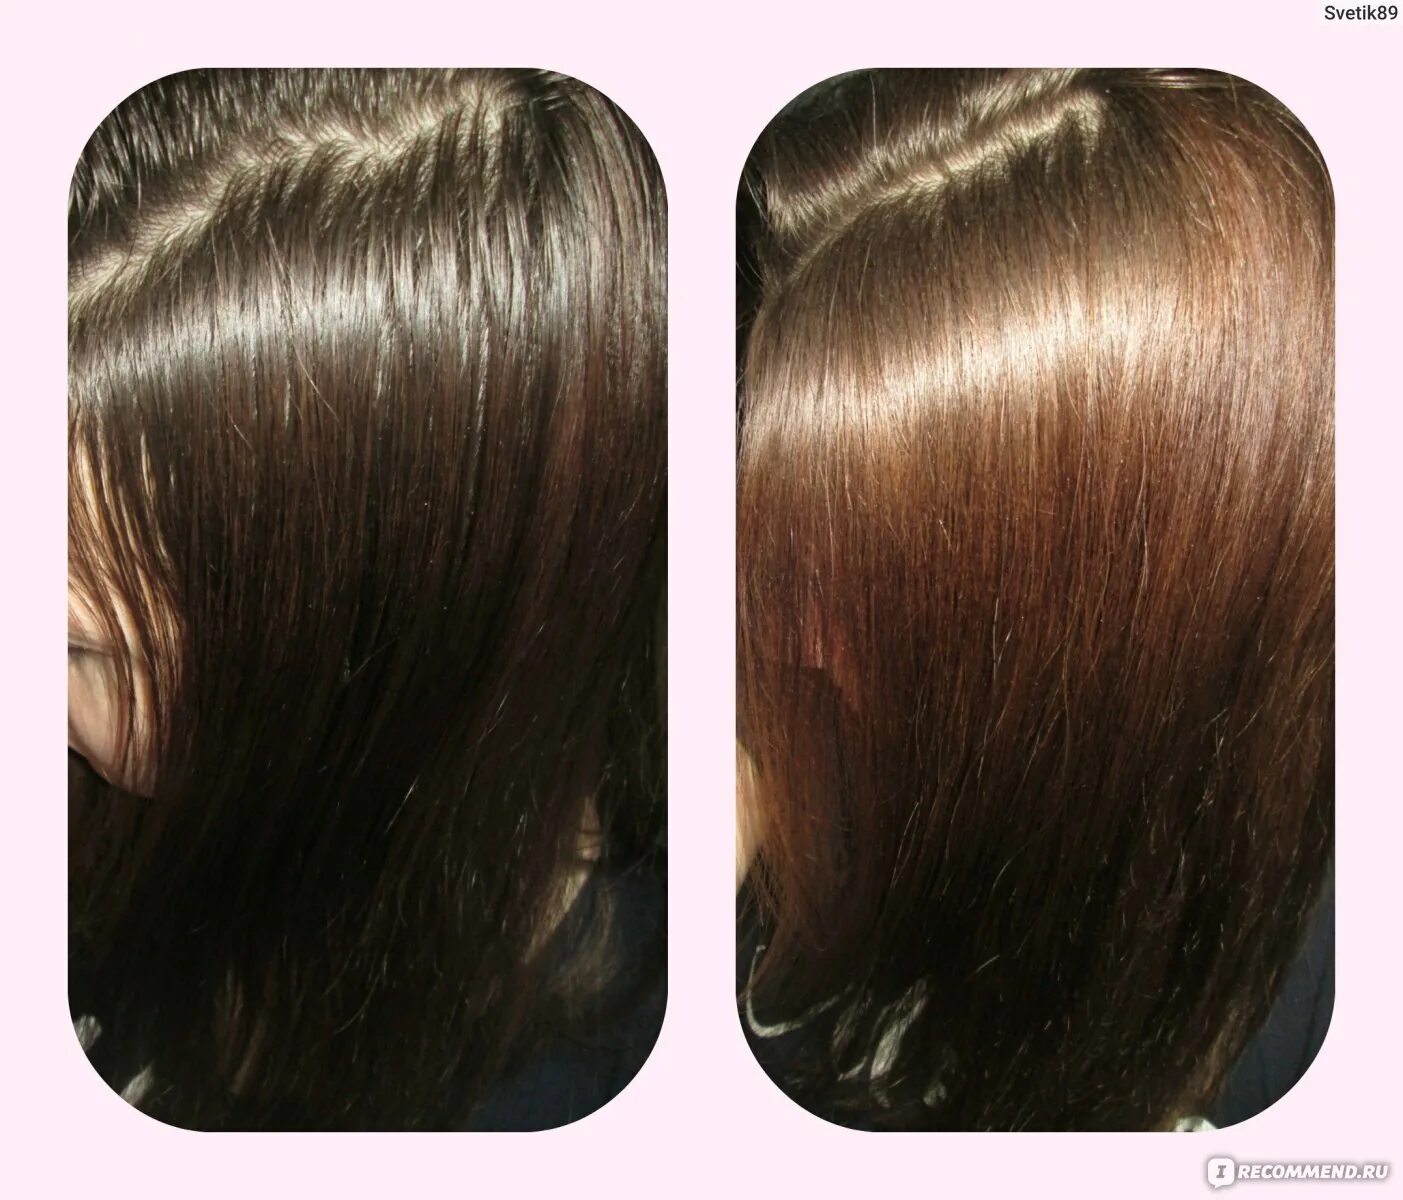 Сухой шампунь для волос до и после. Сухой шампунь эффект до и после. Чистые волосы до и после. Волосы после сухого шампуня